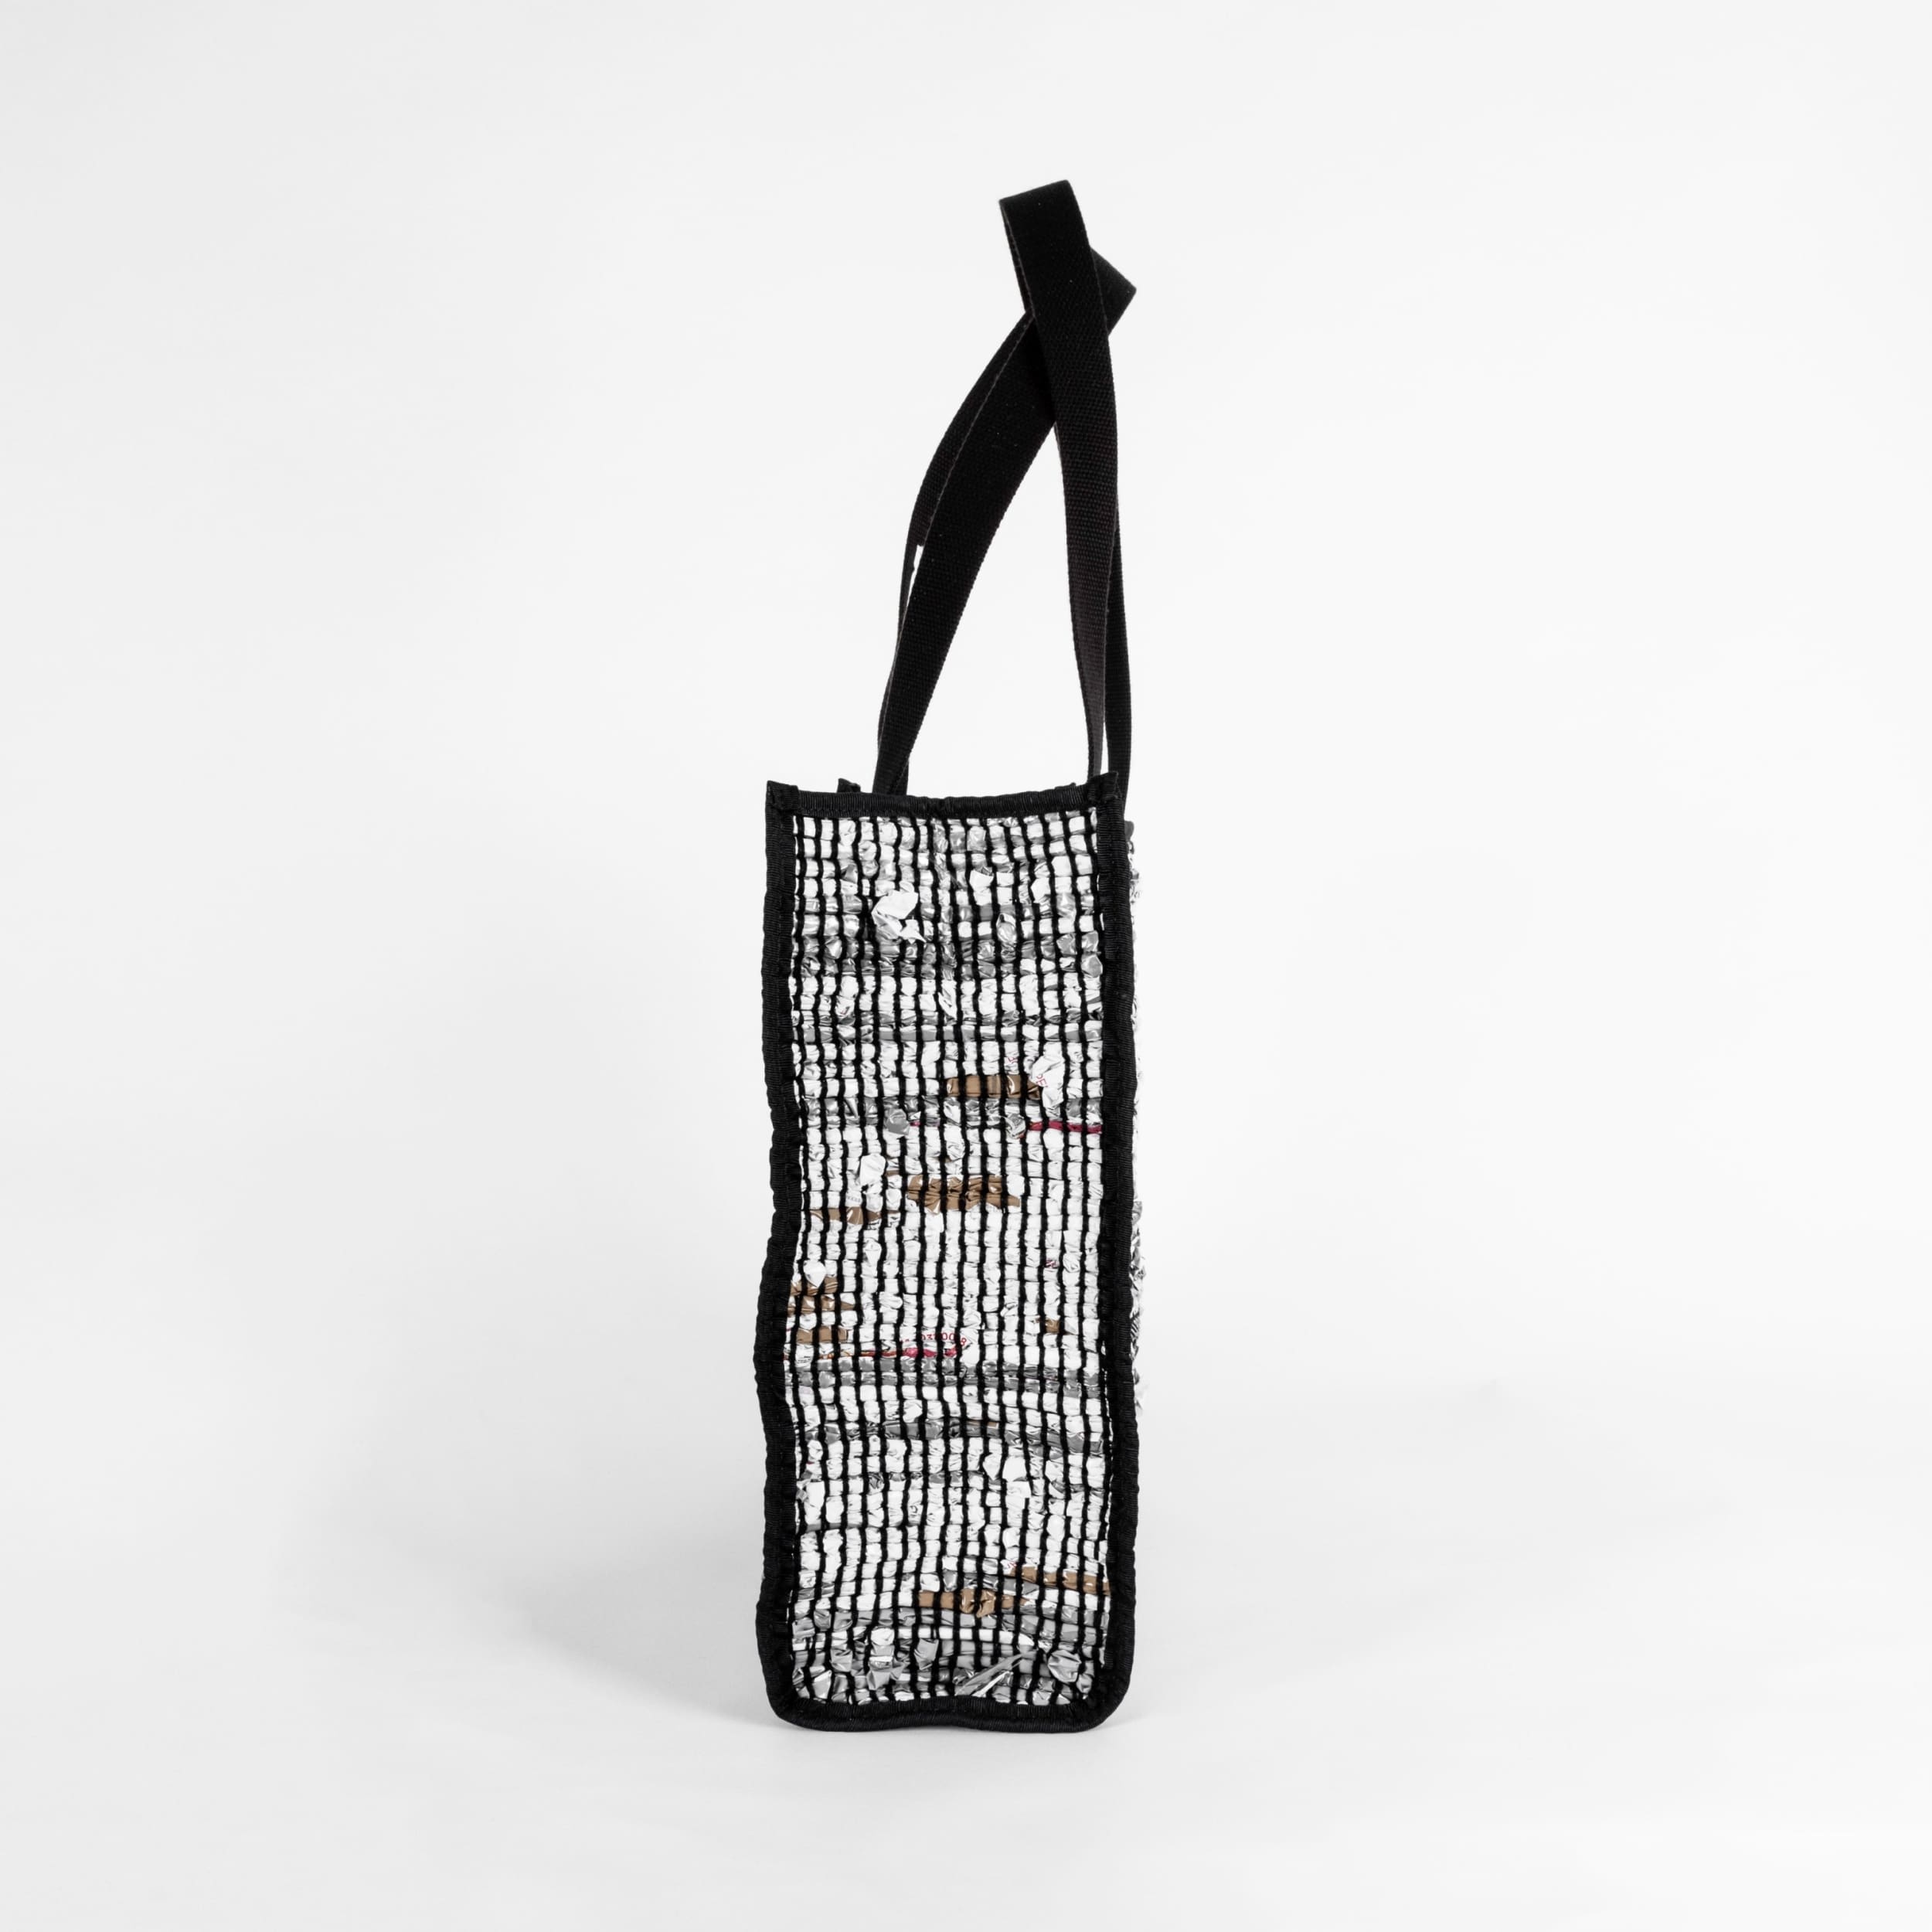 The $133 designer bag made from trash – ANYBAG